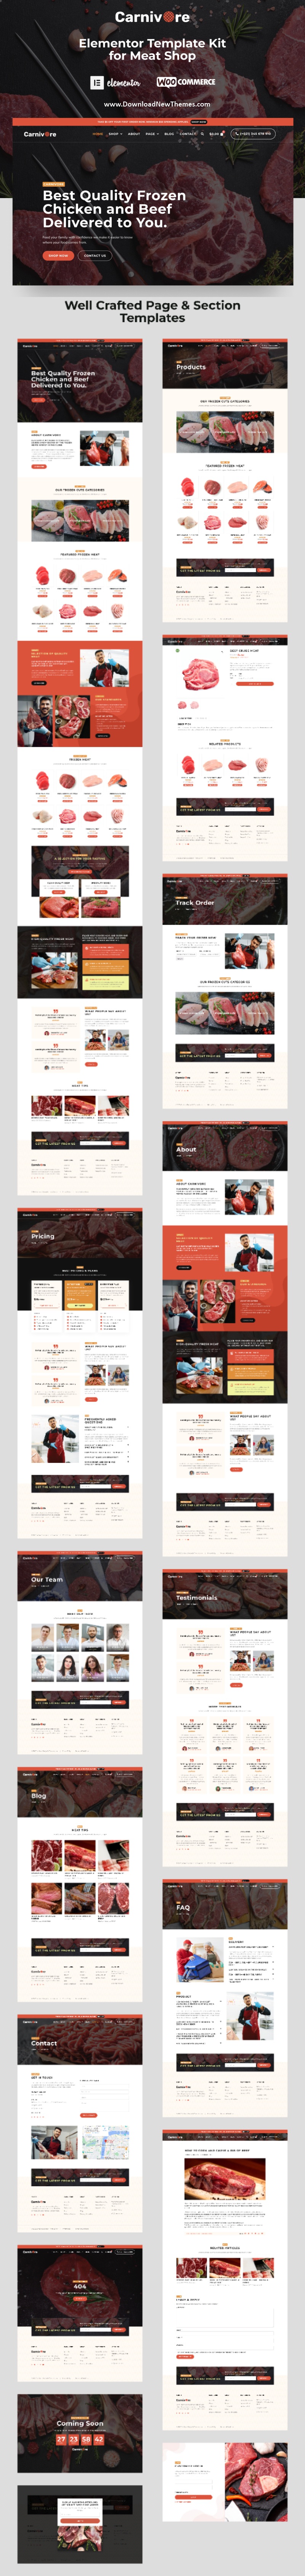 Carnivore - Meat Shop & Butchery Elementor Pro Template Kit Review